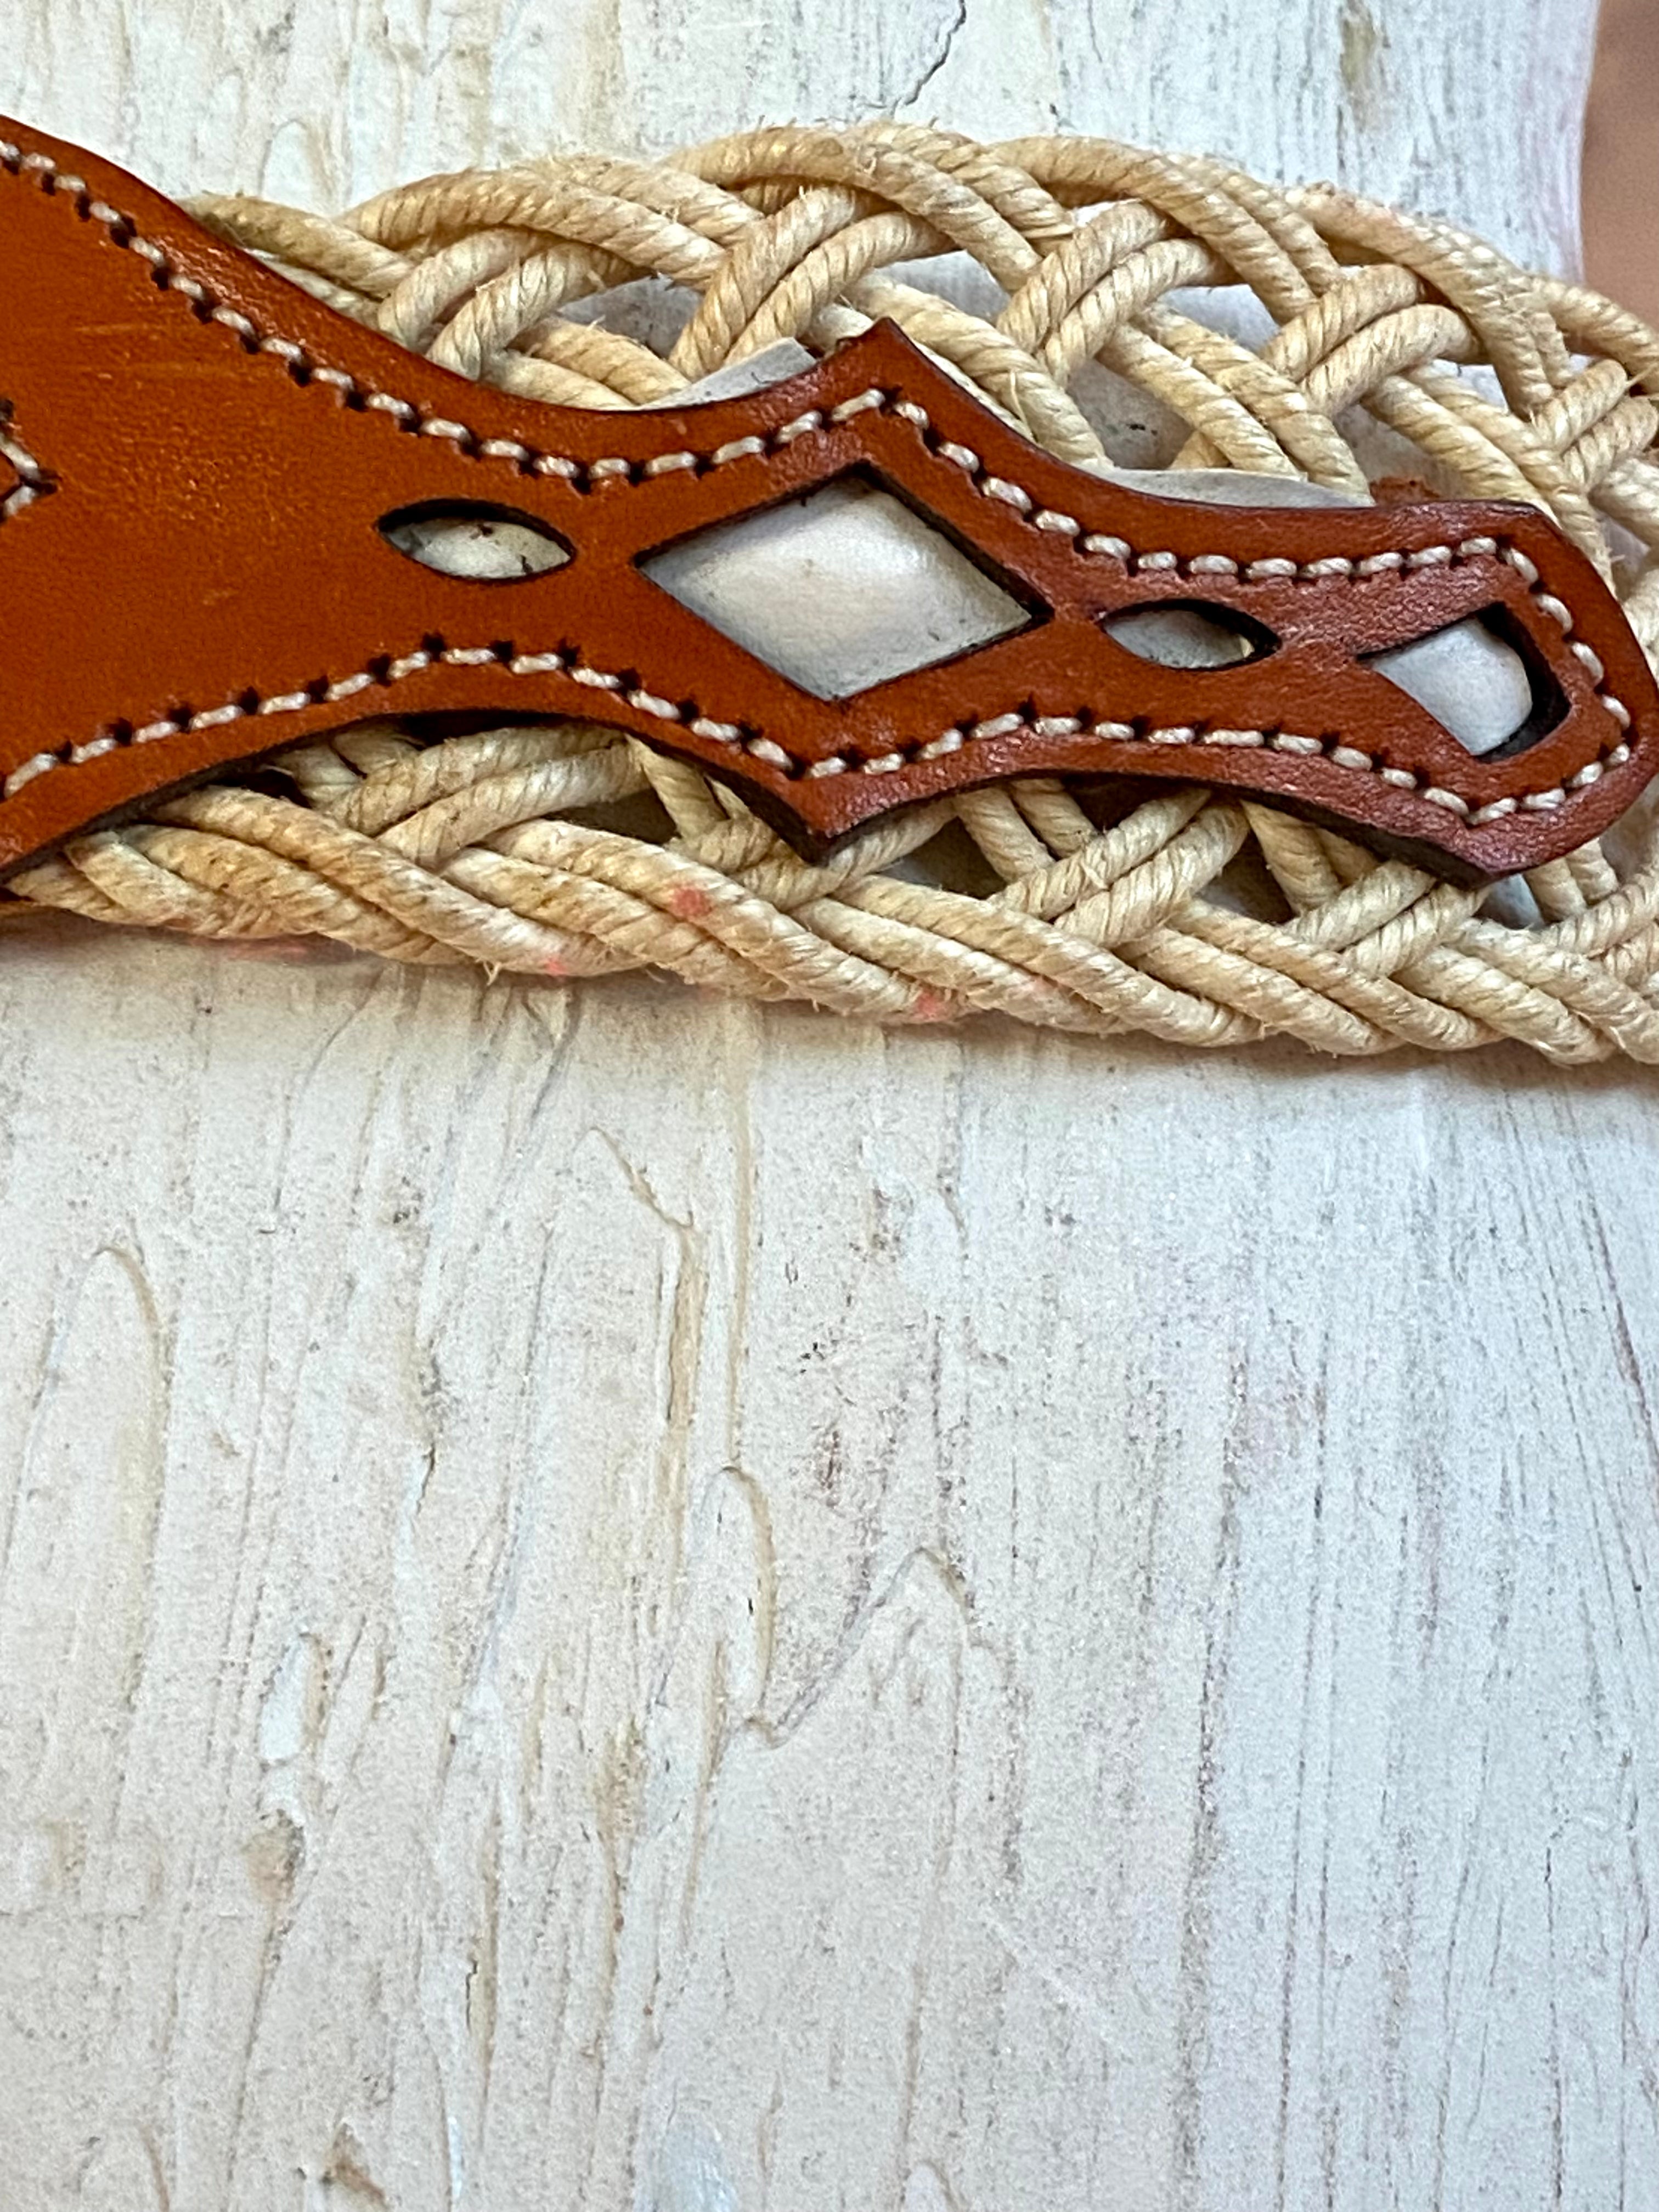 Leather hard  waist belt